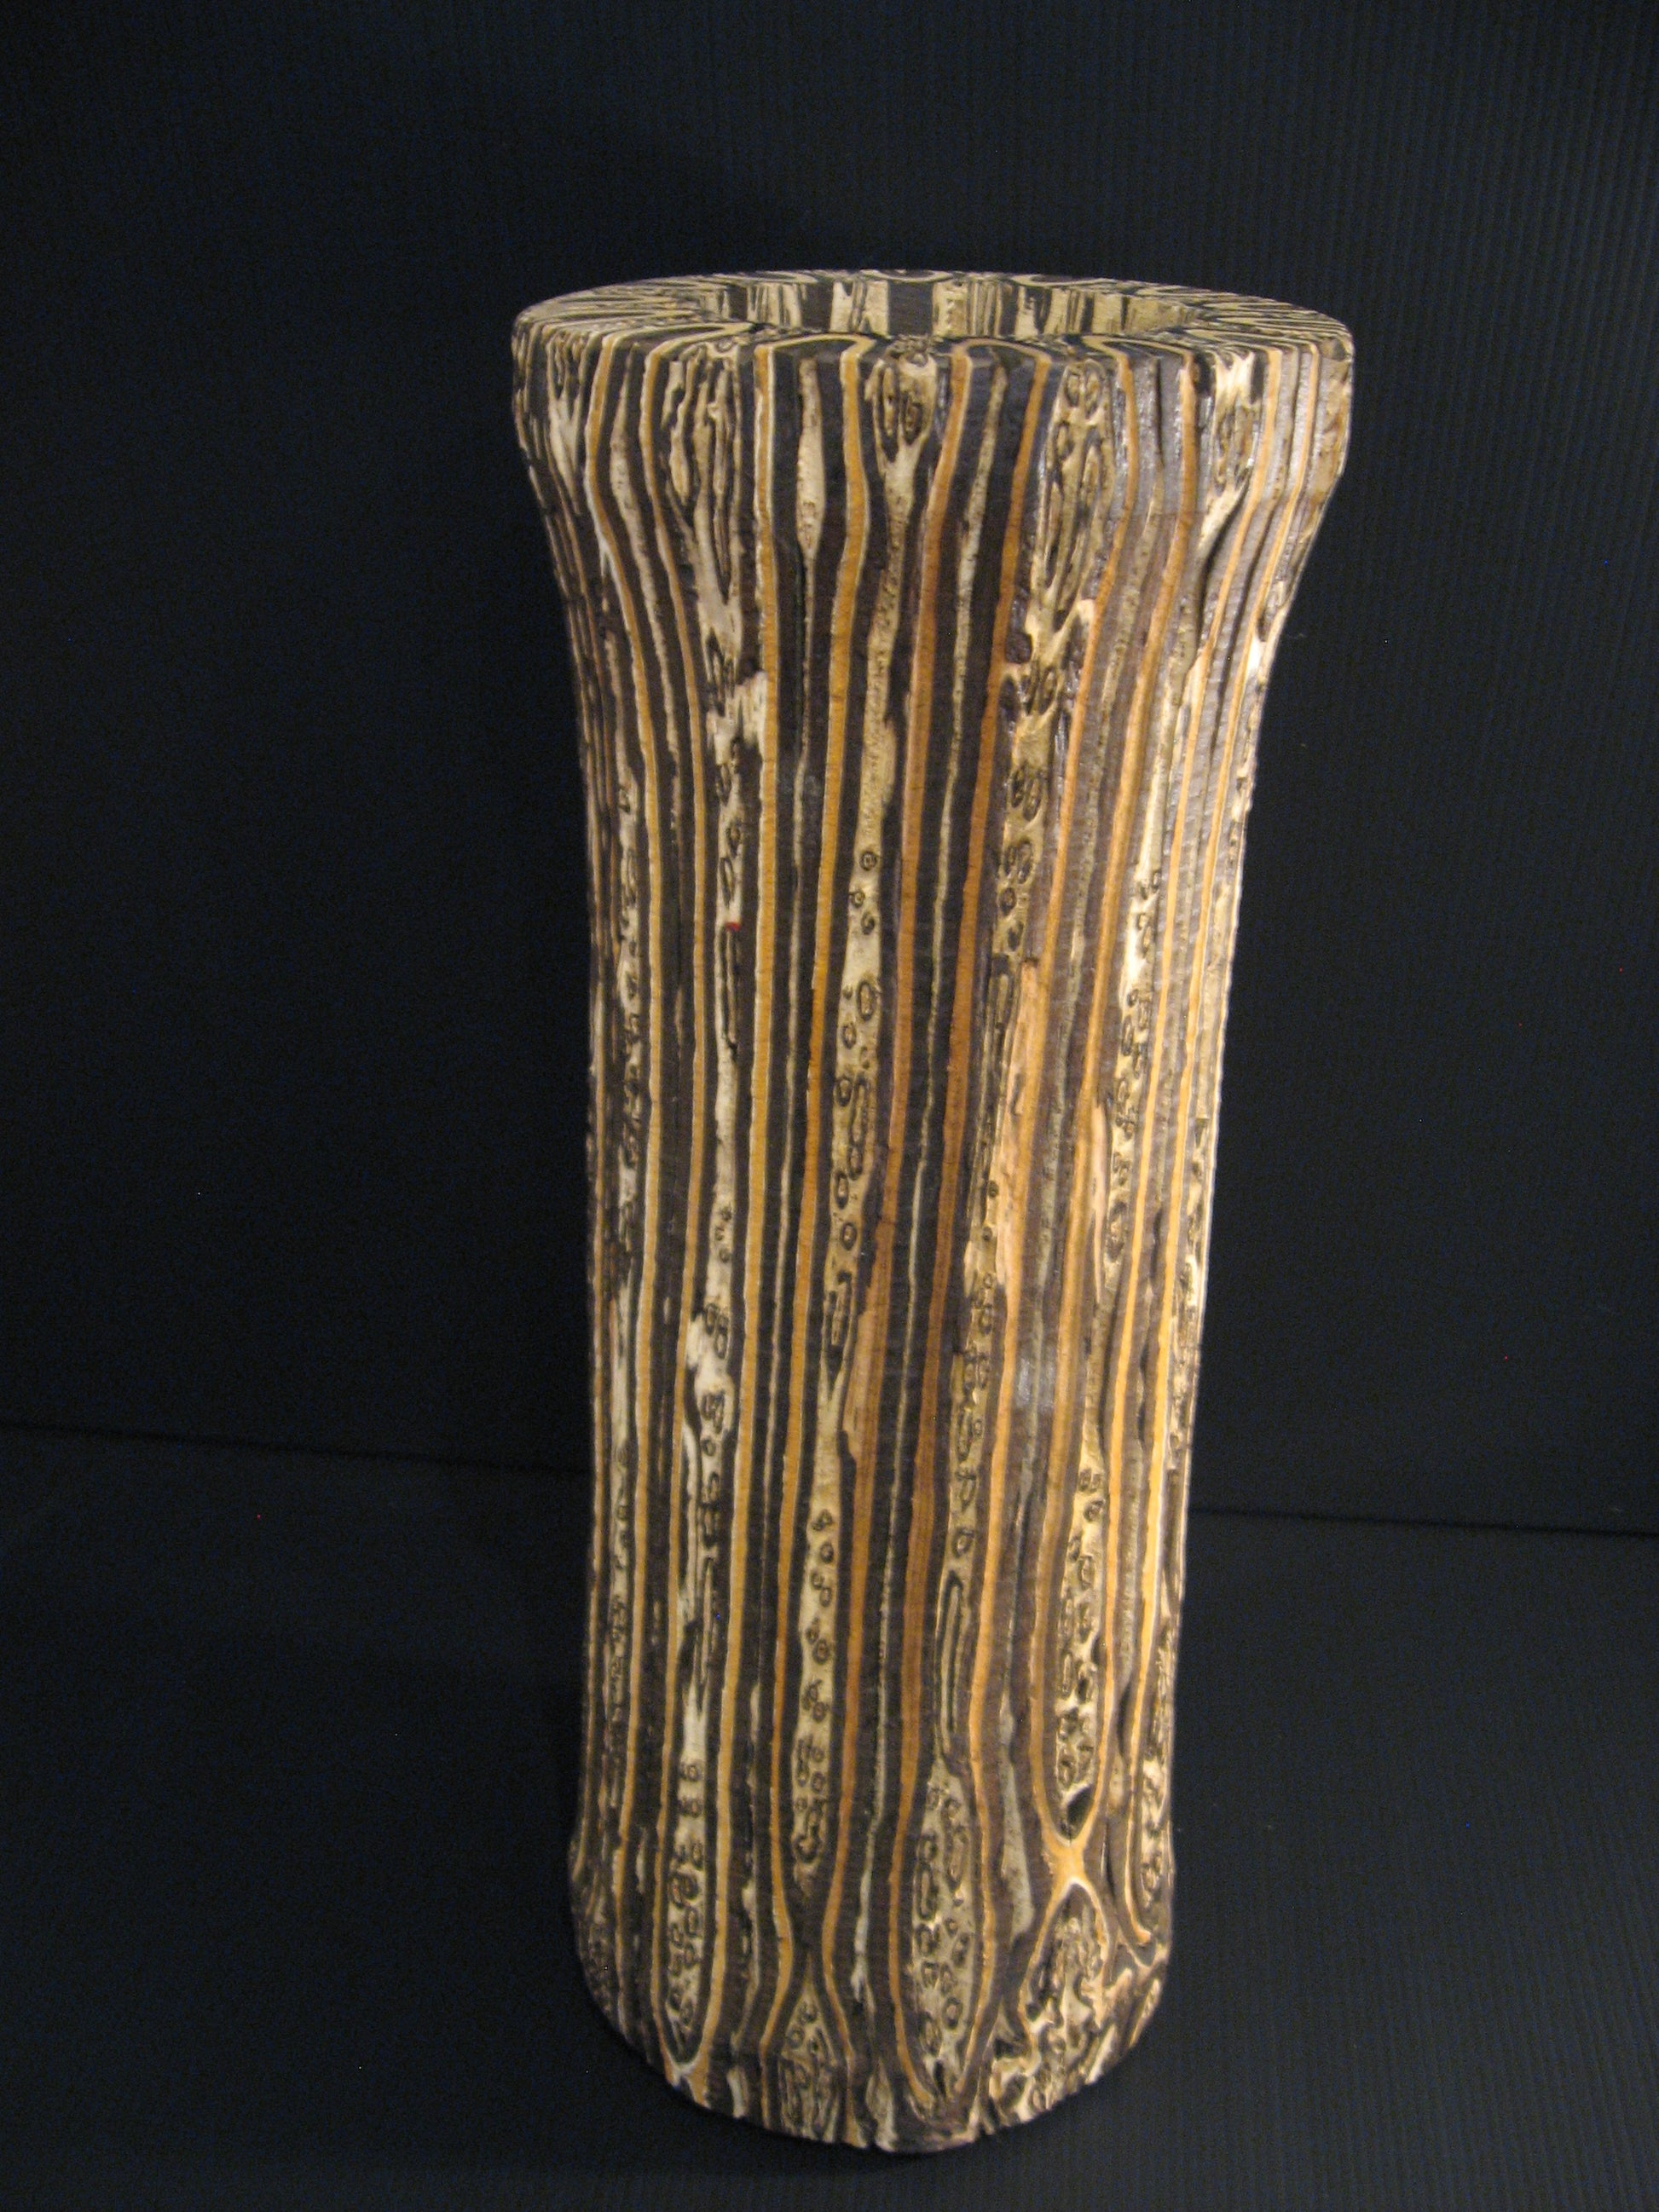 Ponga Wooden Vase New Zealand Native Wood by Fernwood Silver Fern Gallery